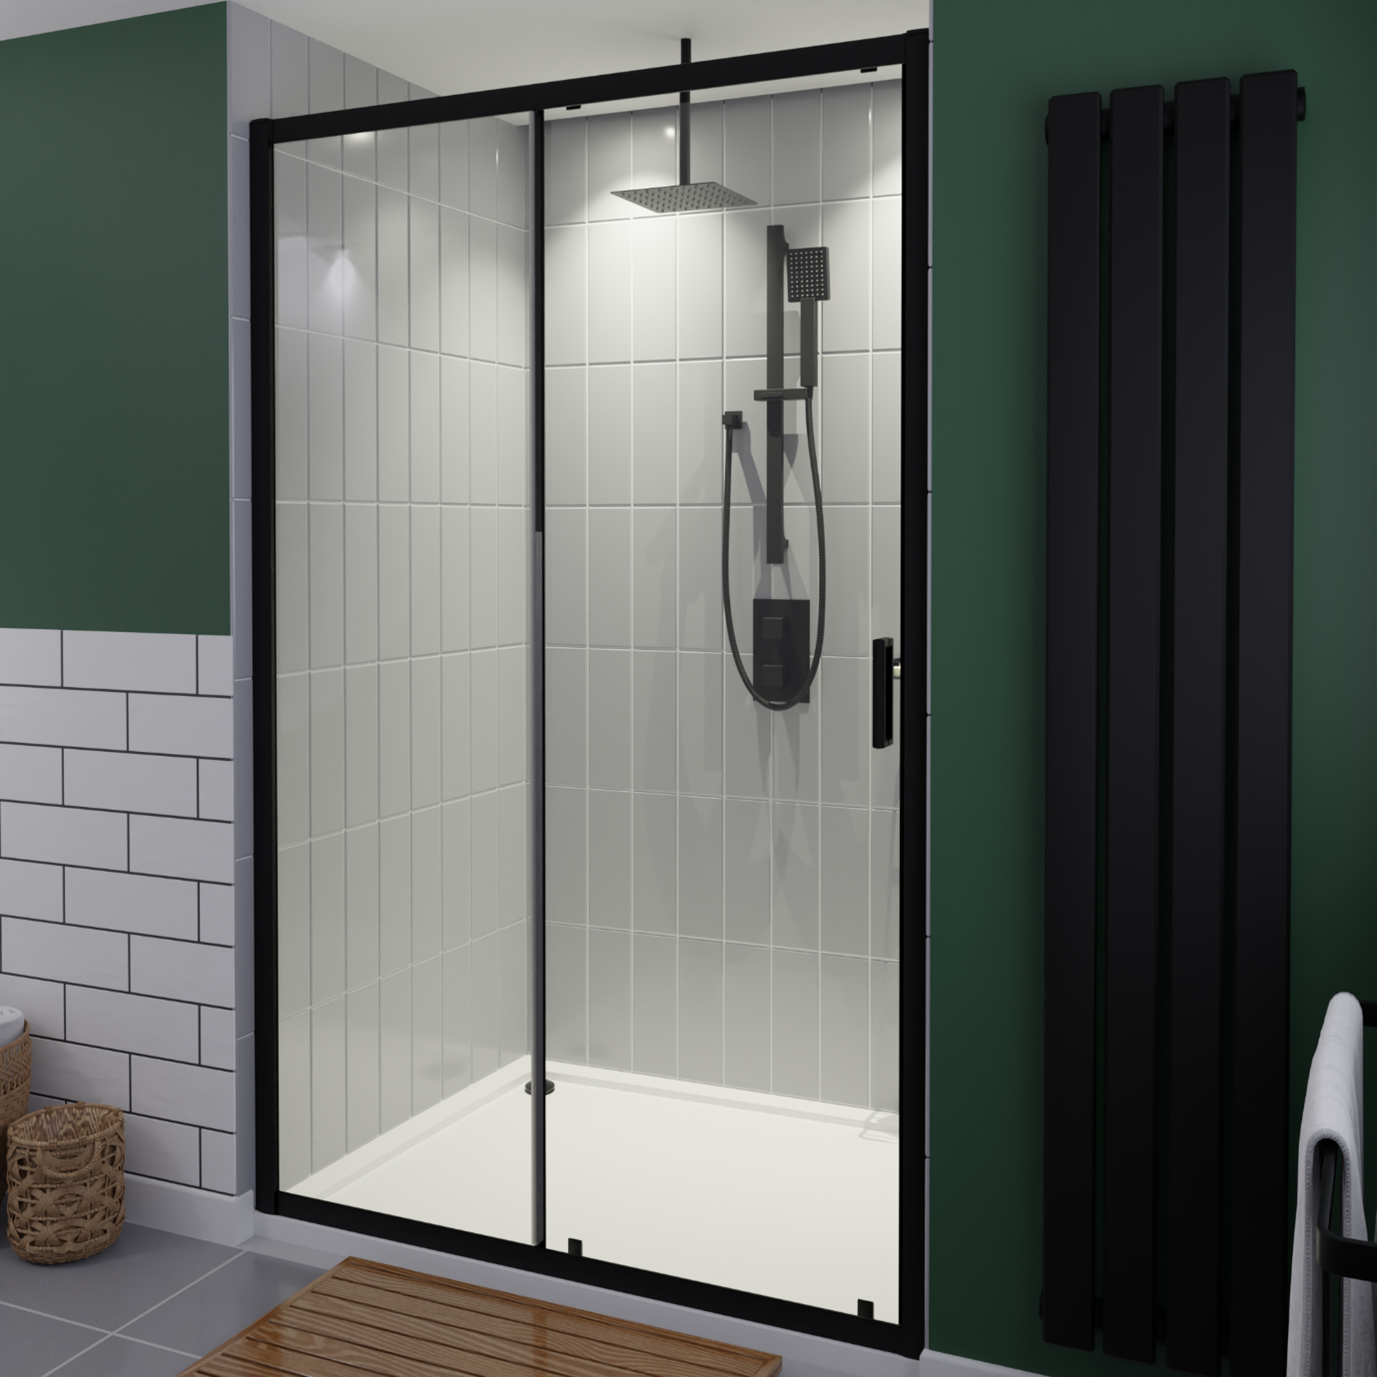 Black Vertical Bathroom Radiator Next to a Black Walk-In Shower Enclosure